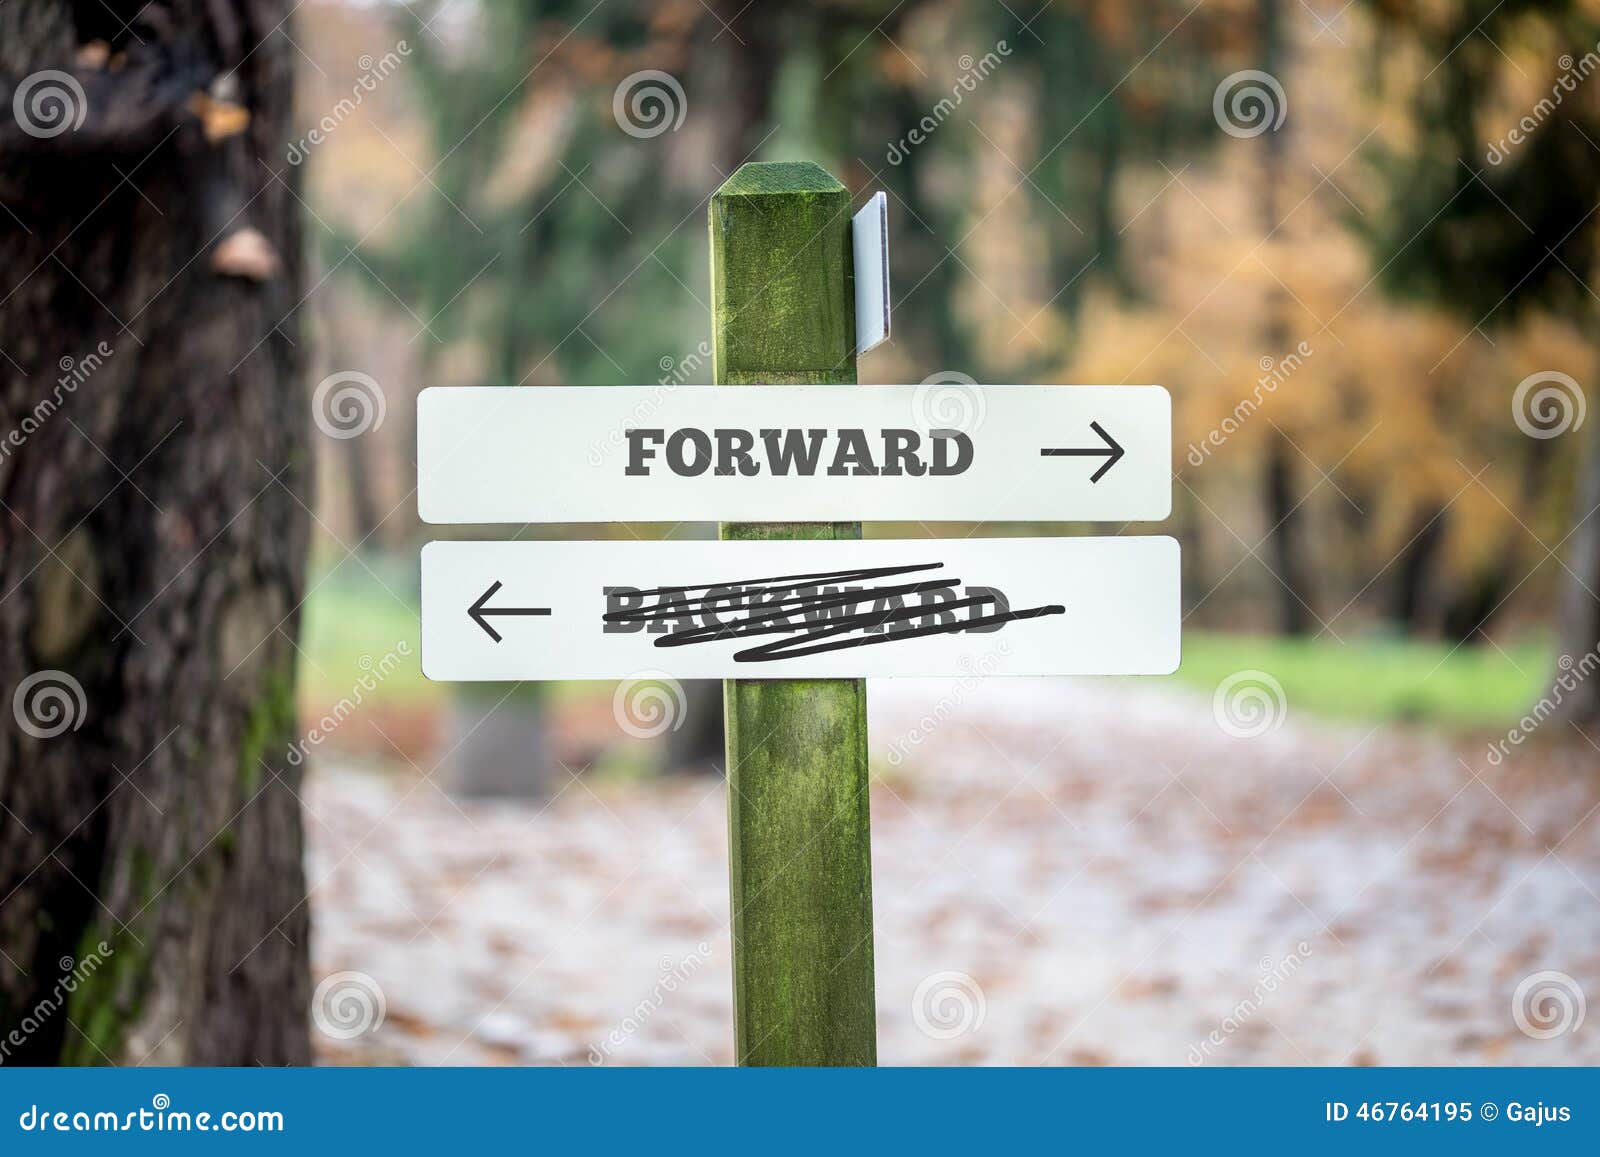 rural signboard - forward - backward